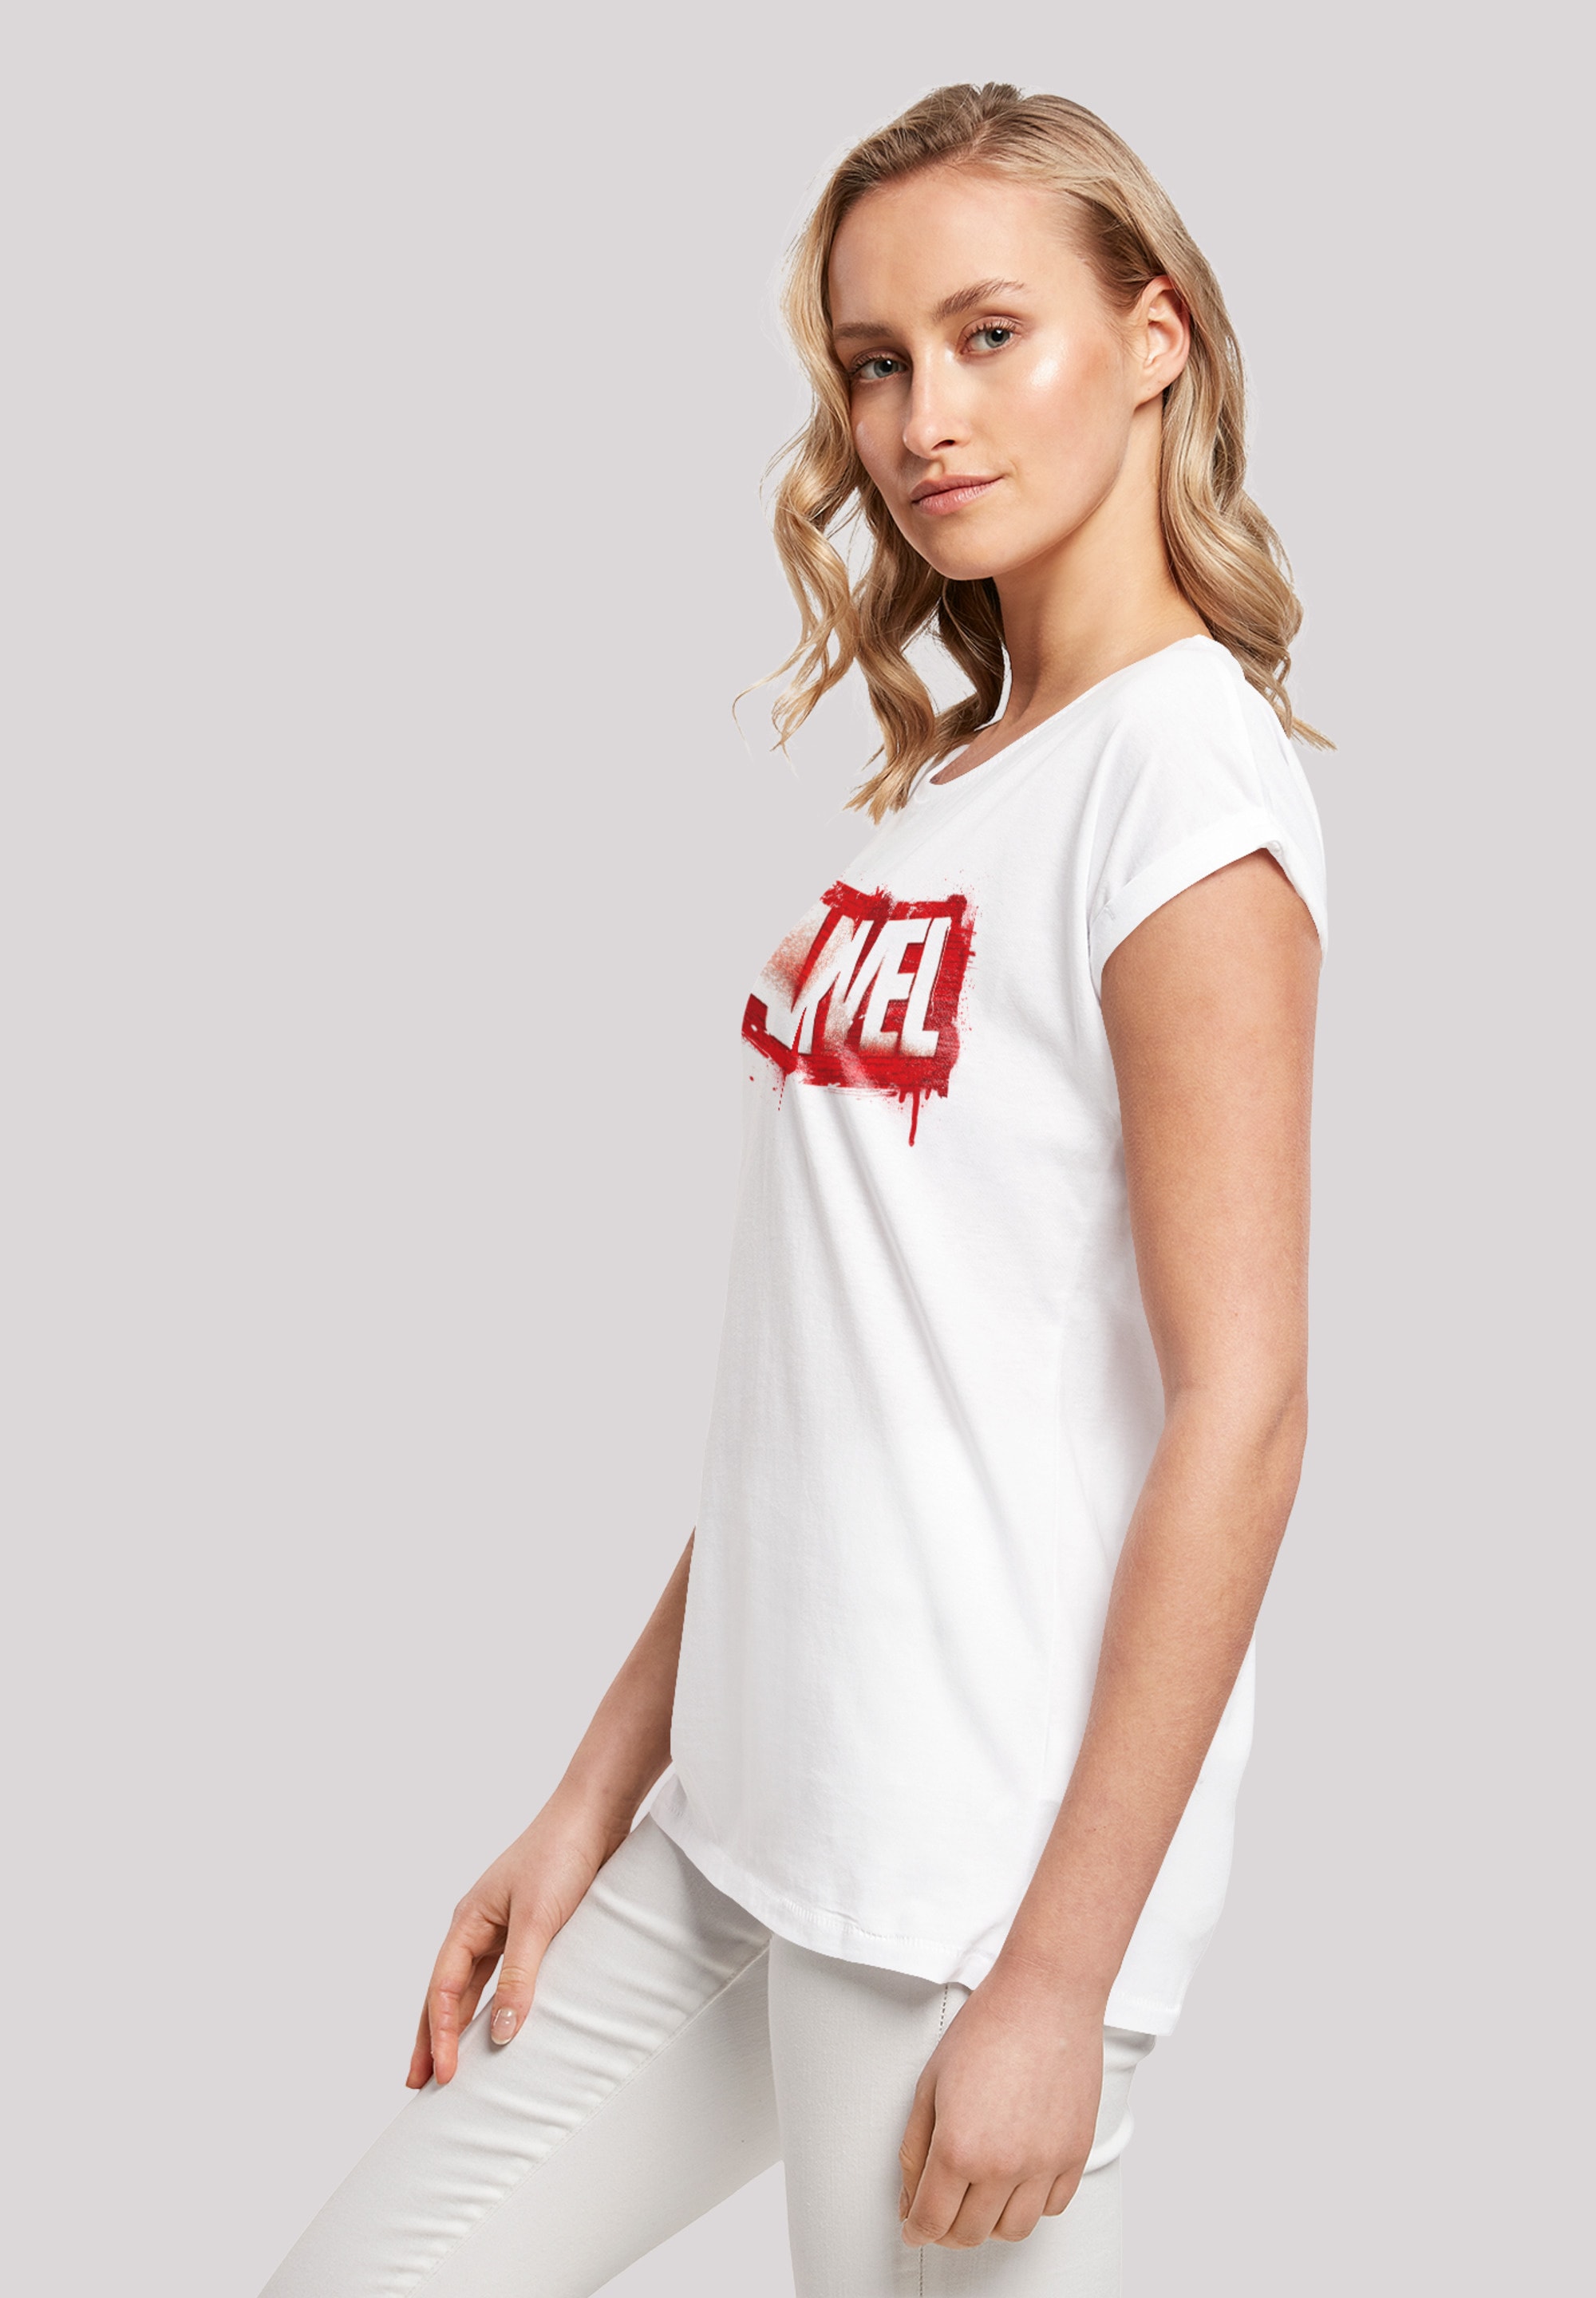 F4NT4STIC T-Shirt »Marvel Spray Logo«, Print